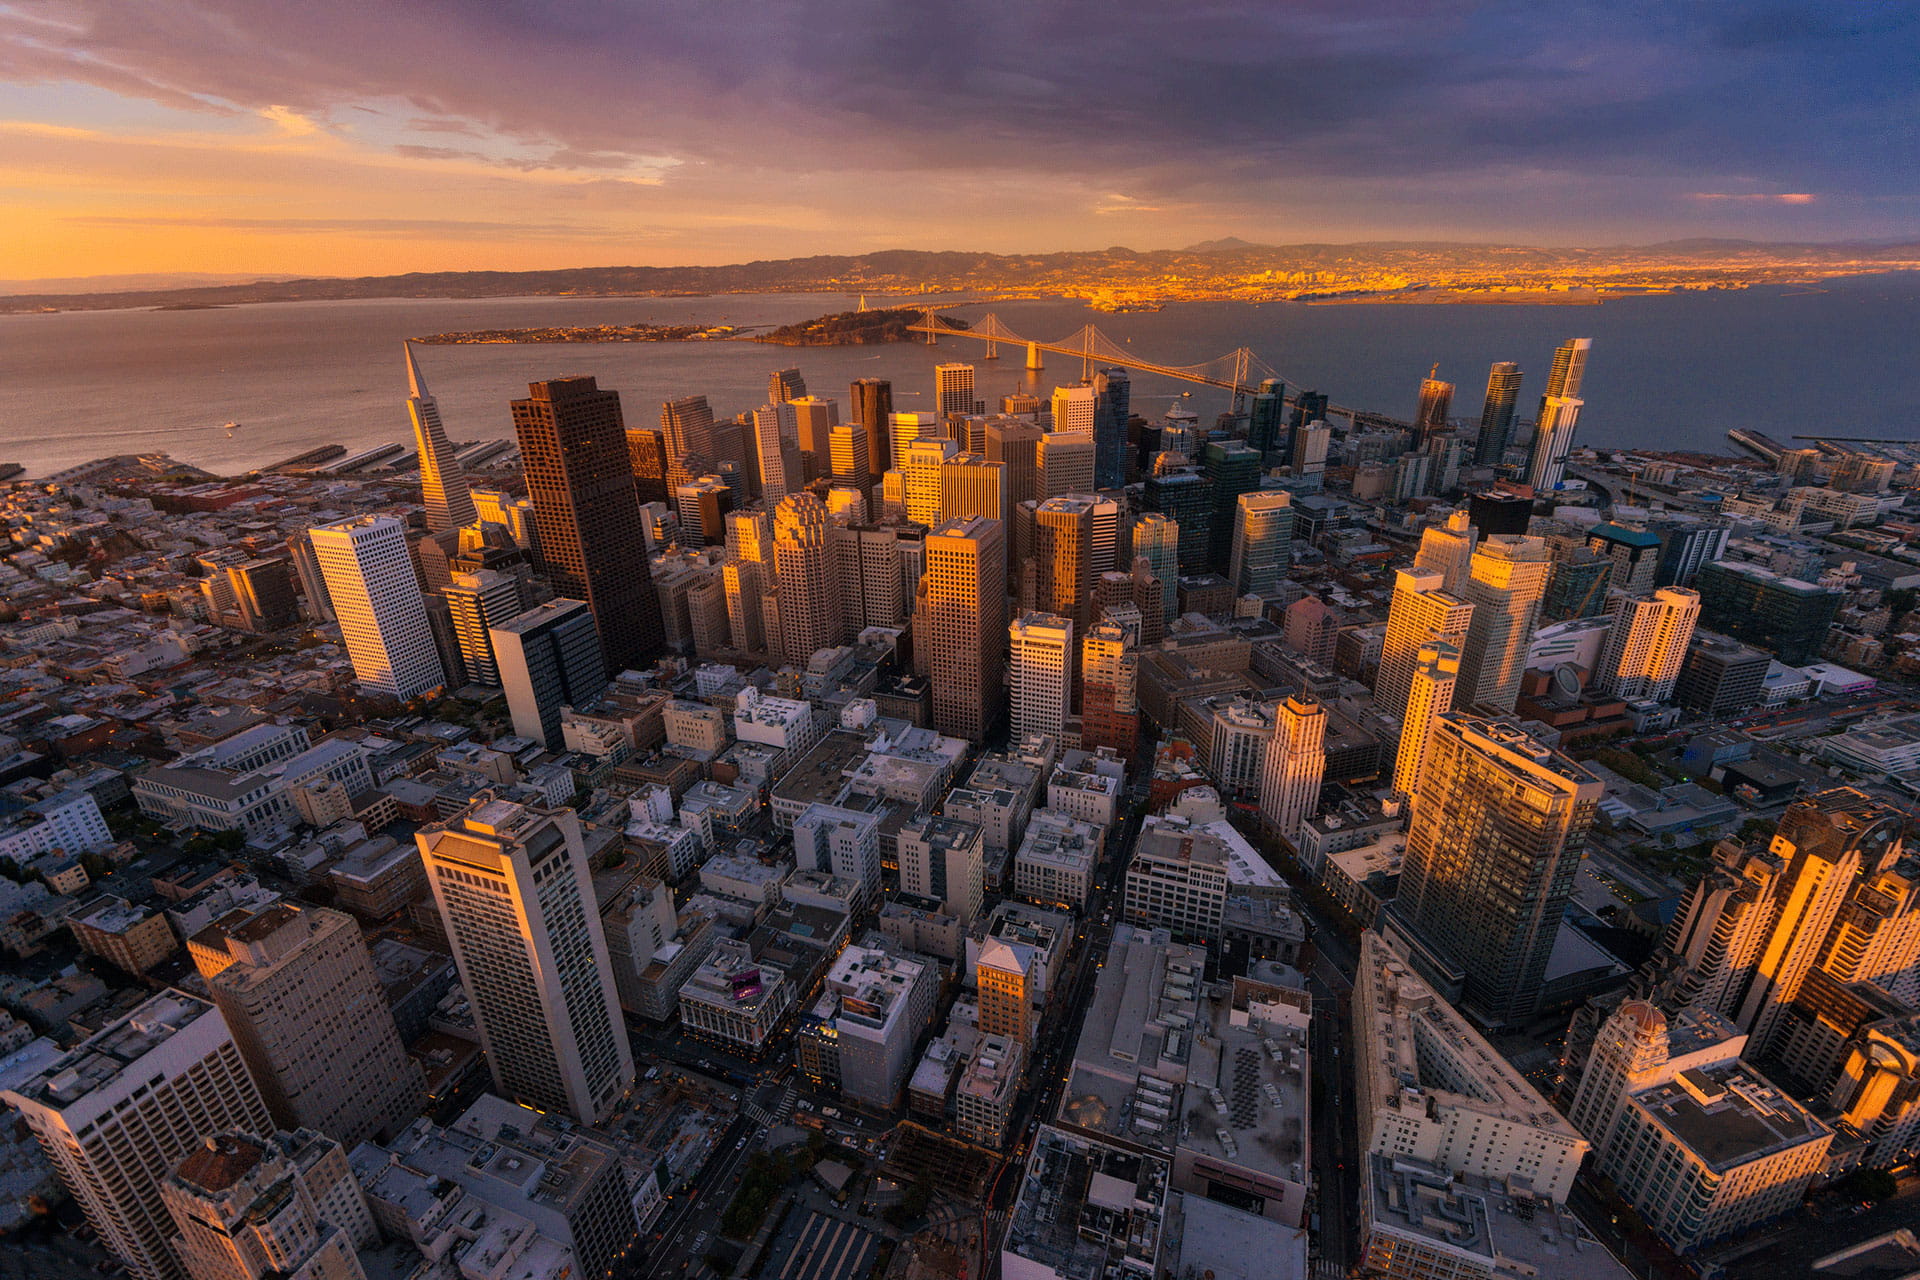 Bird's eye view of San Francisco